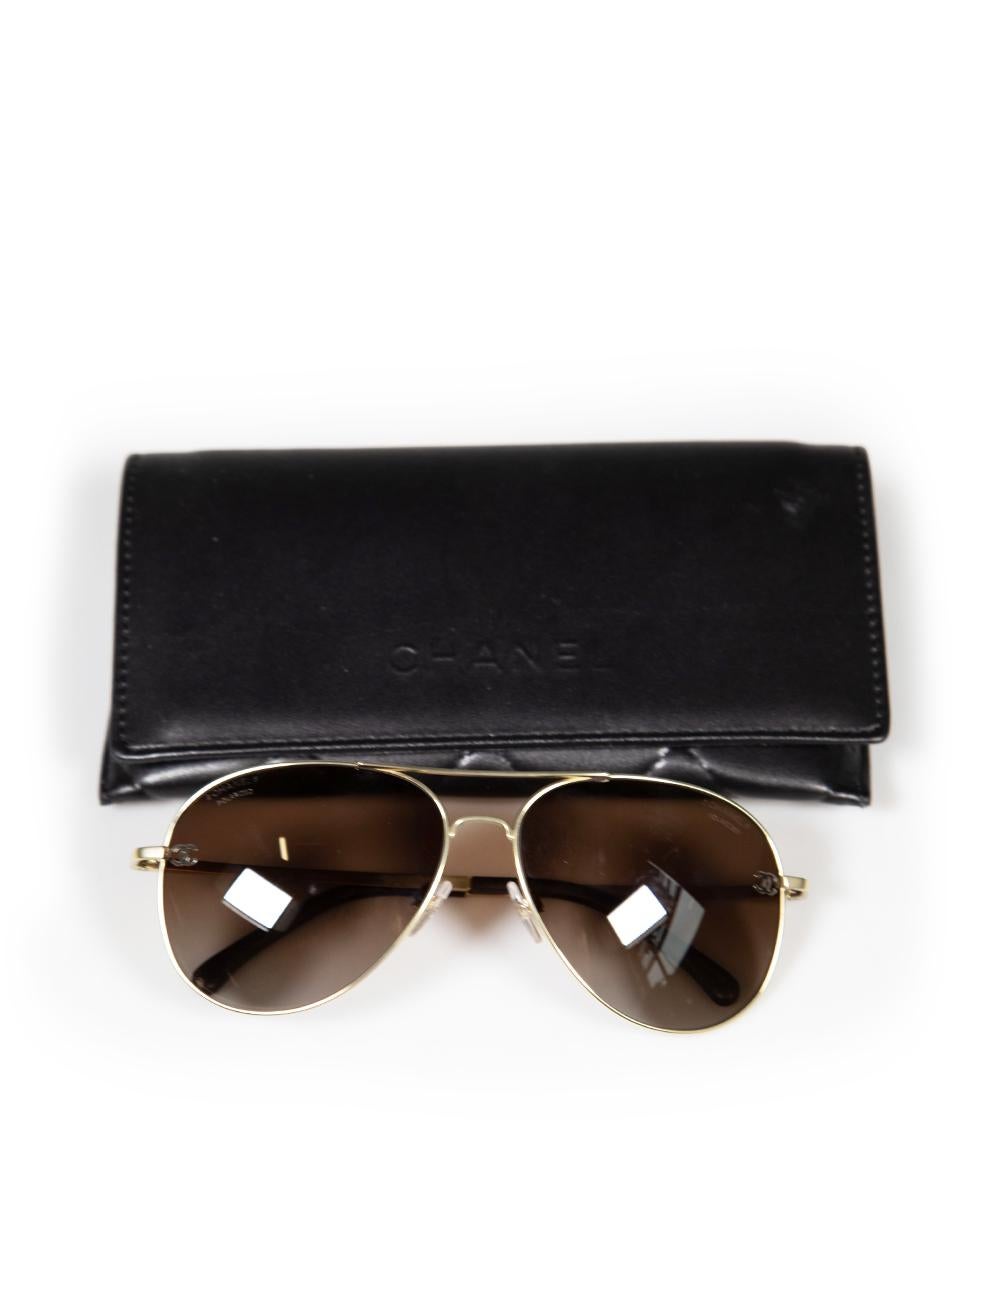 Chanel Brown Interlocking CC Aviator Sunglasses For Sale 1